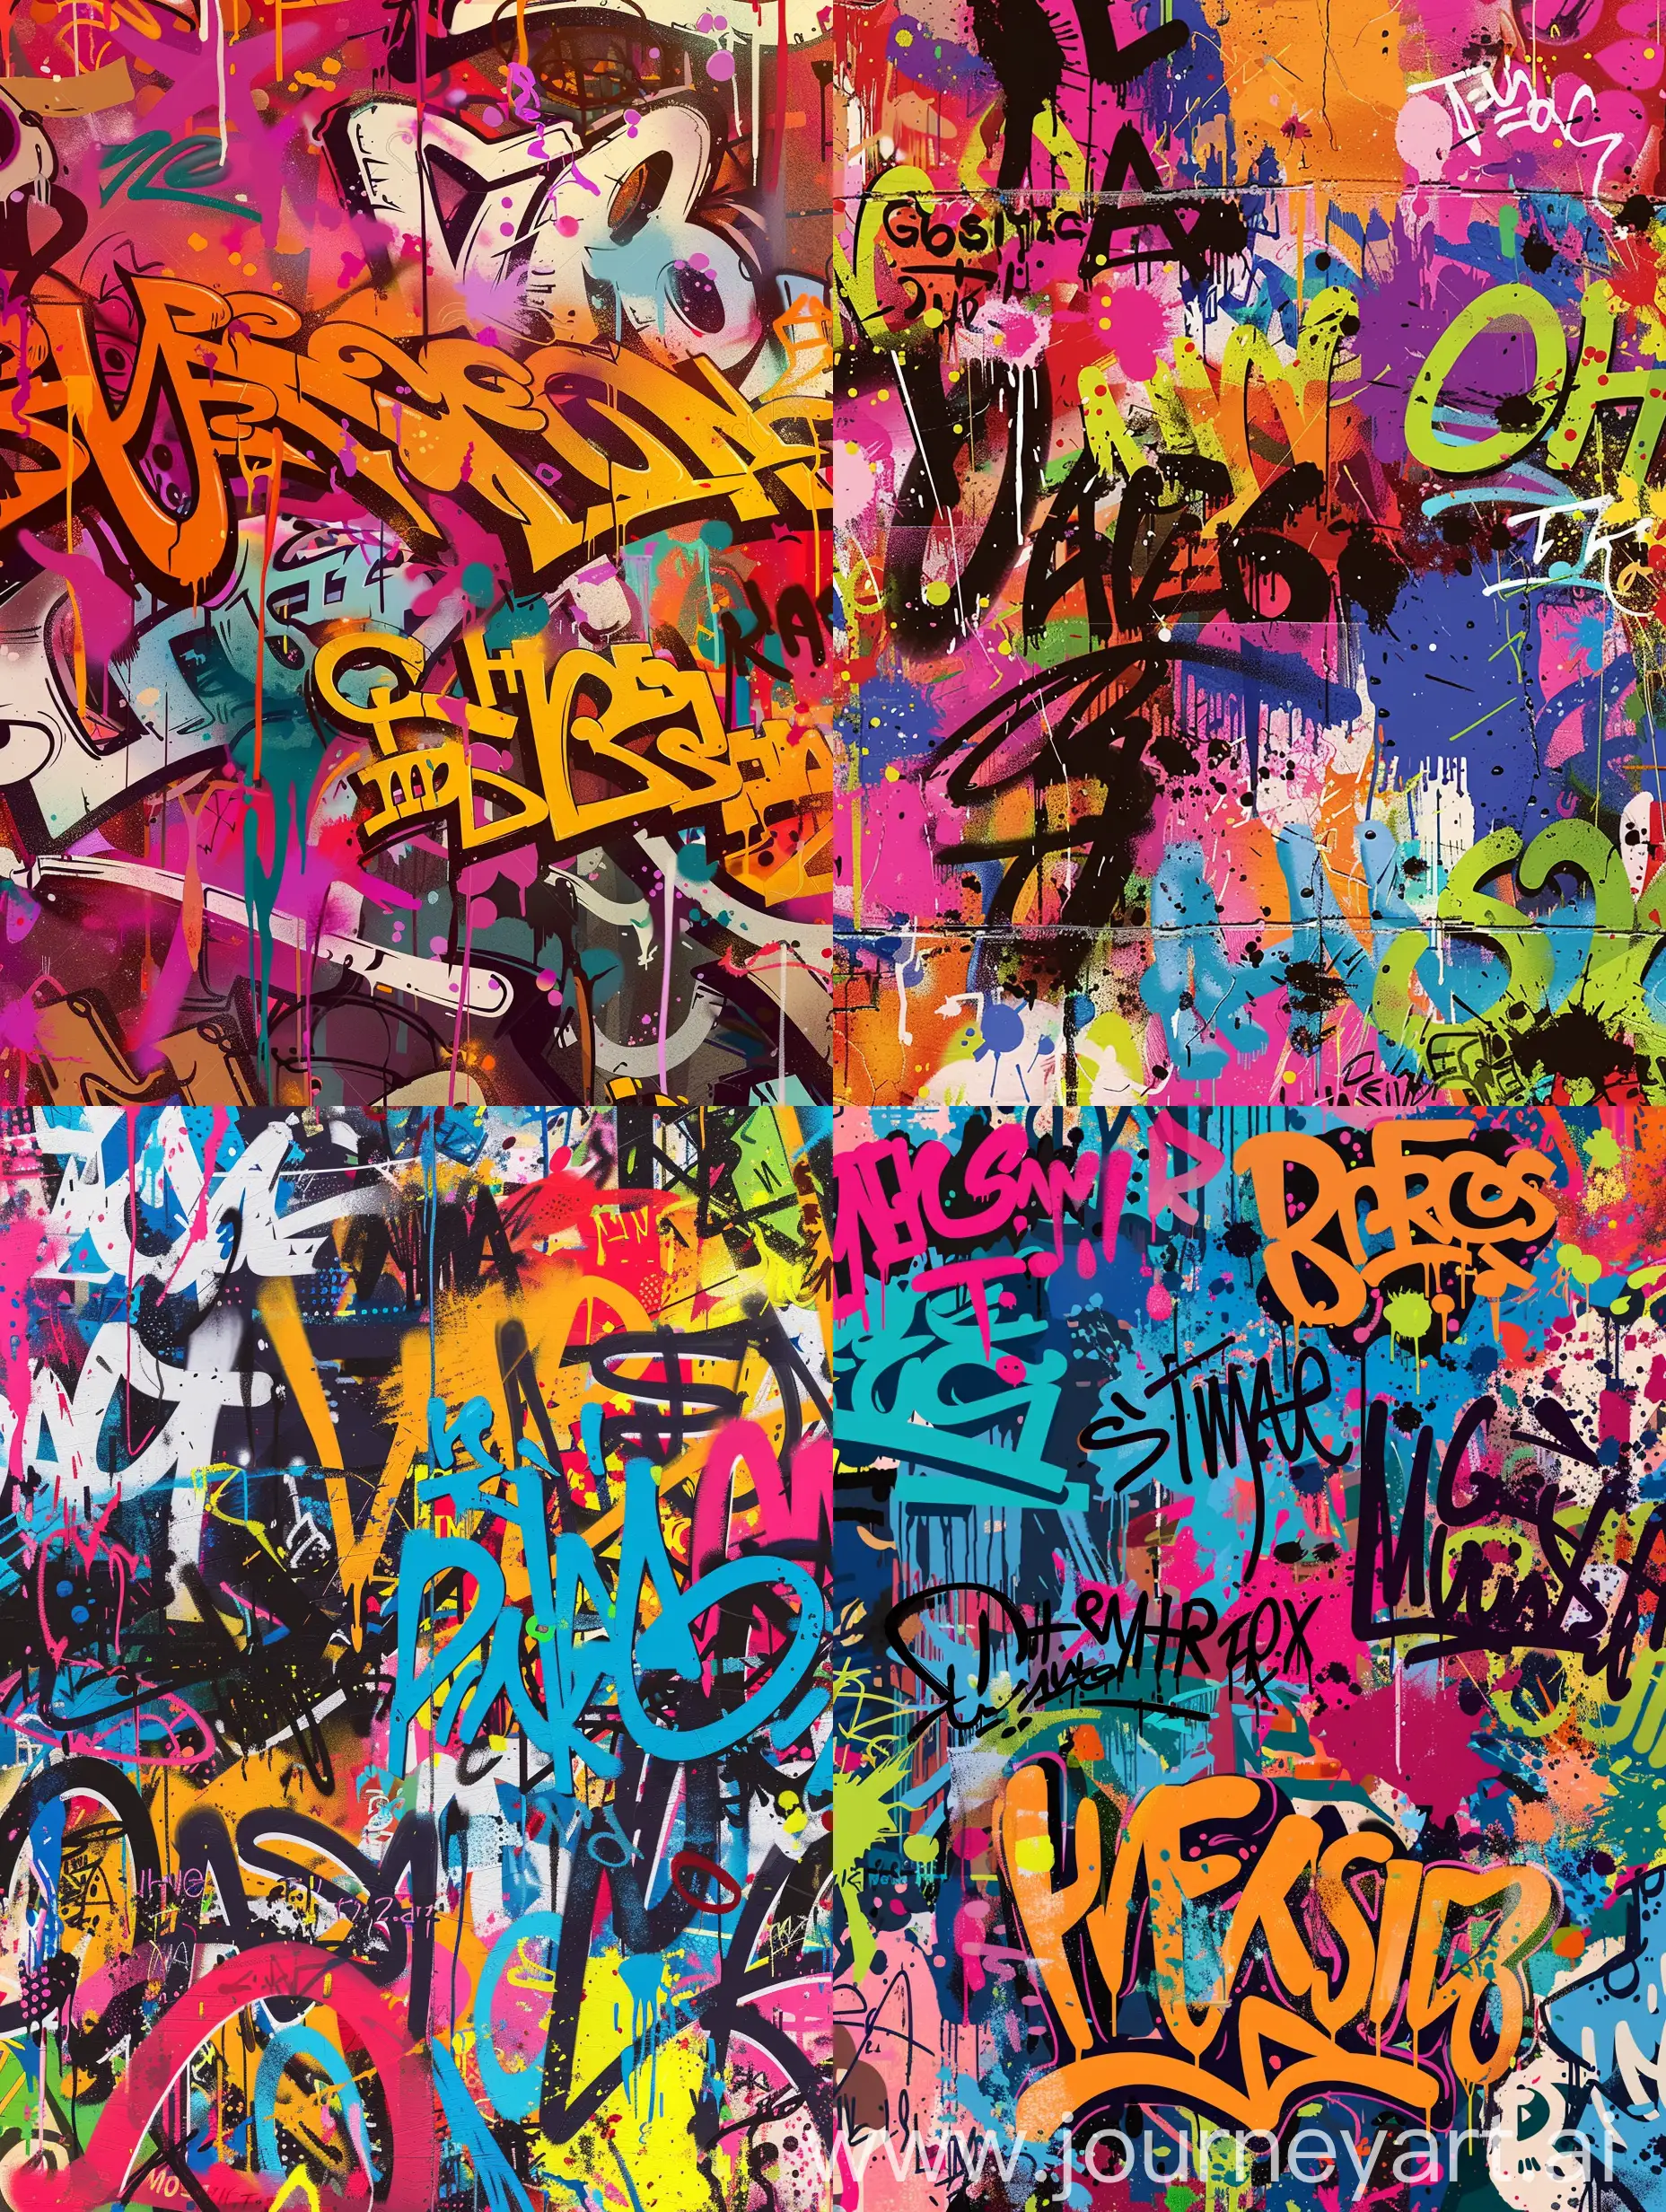 flat illustration graffiti on cava:2, Fantasy illustration of The roll royces emblem:5, alive, graffiti, traditional vibrant, urban, detailed, tag, background full of paint splash and graffiti text, random sized graffiti text all over typography:2, canva texture